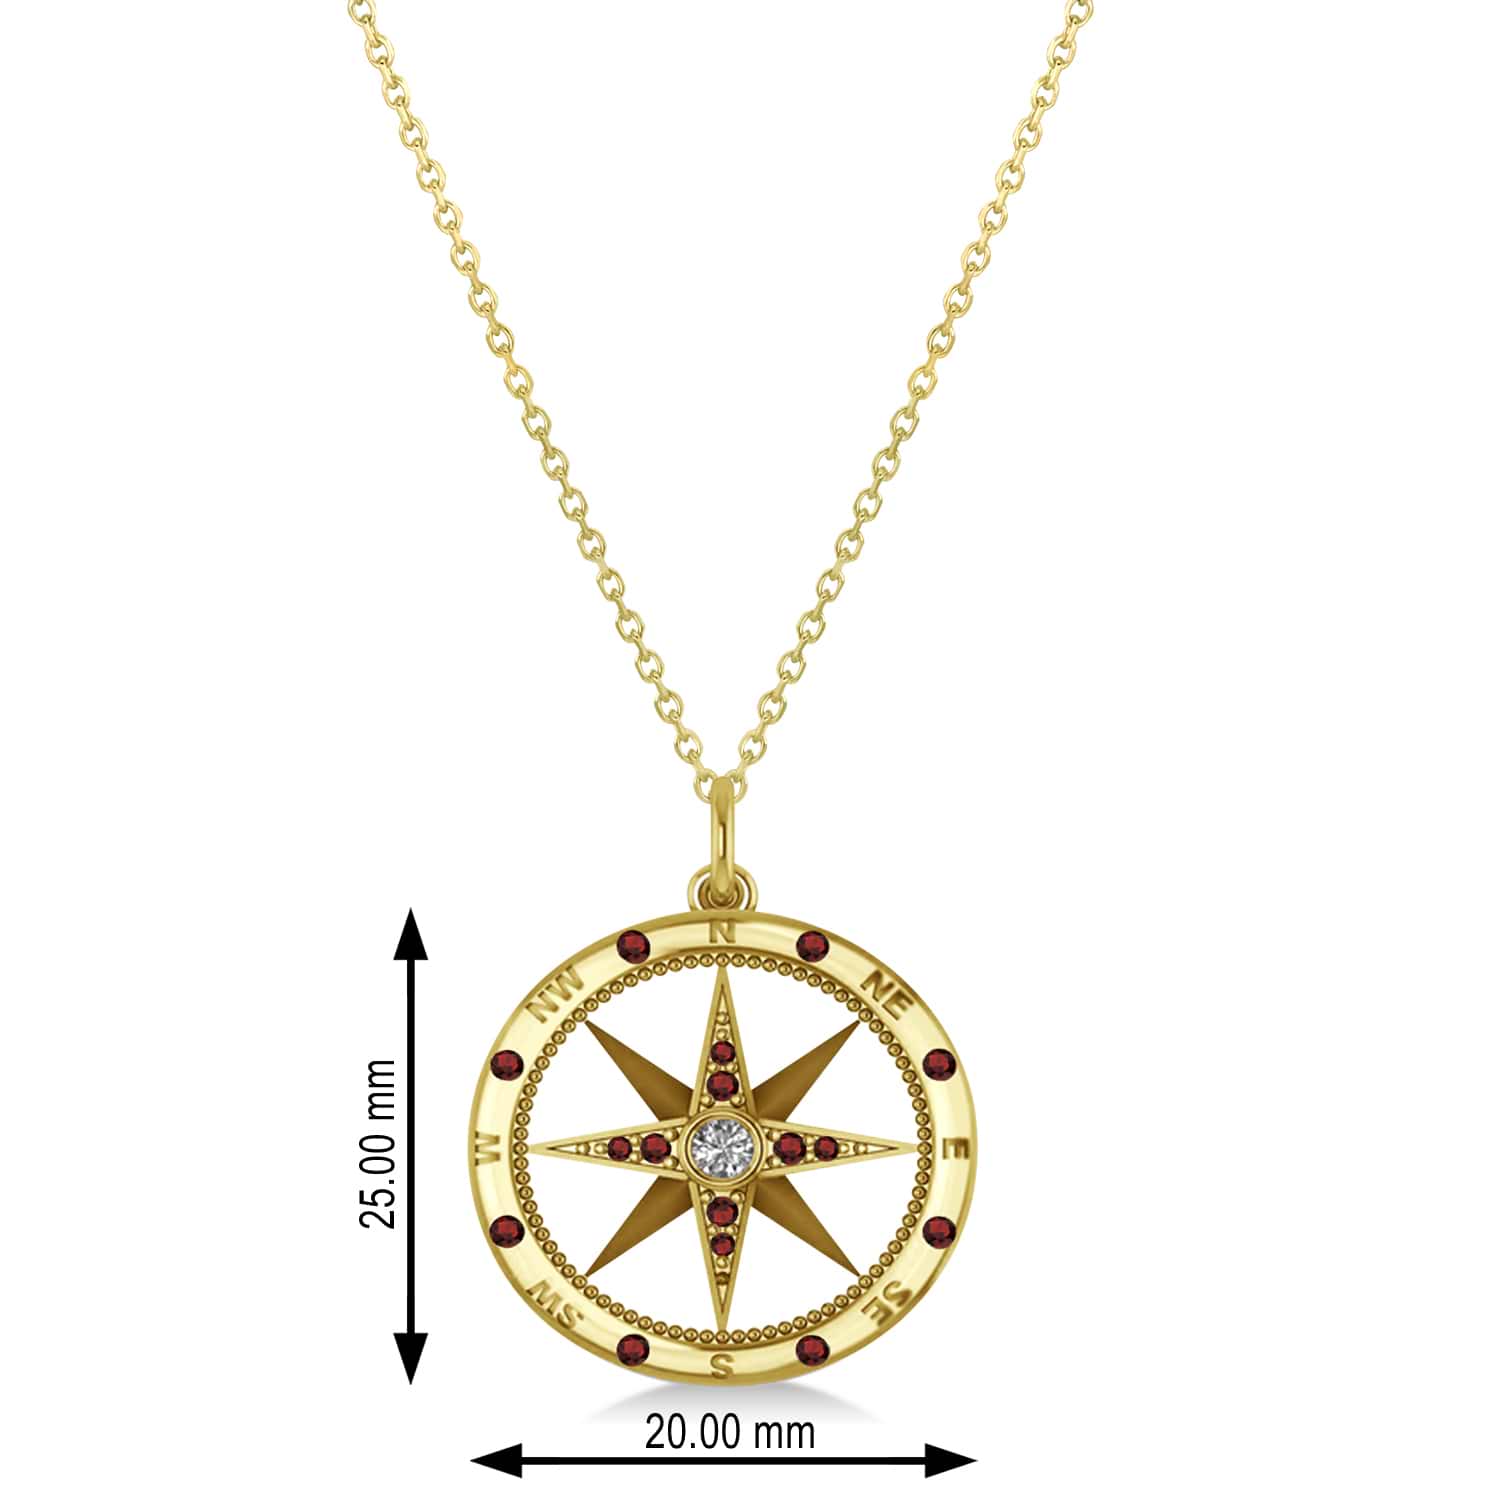 Compass Pendant Garnet & Diamond Accented 14k Yellow Gold (0.19ct)